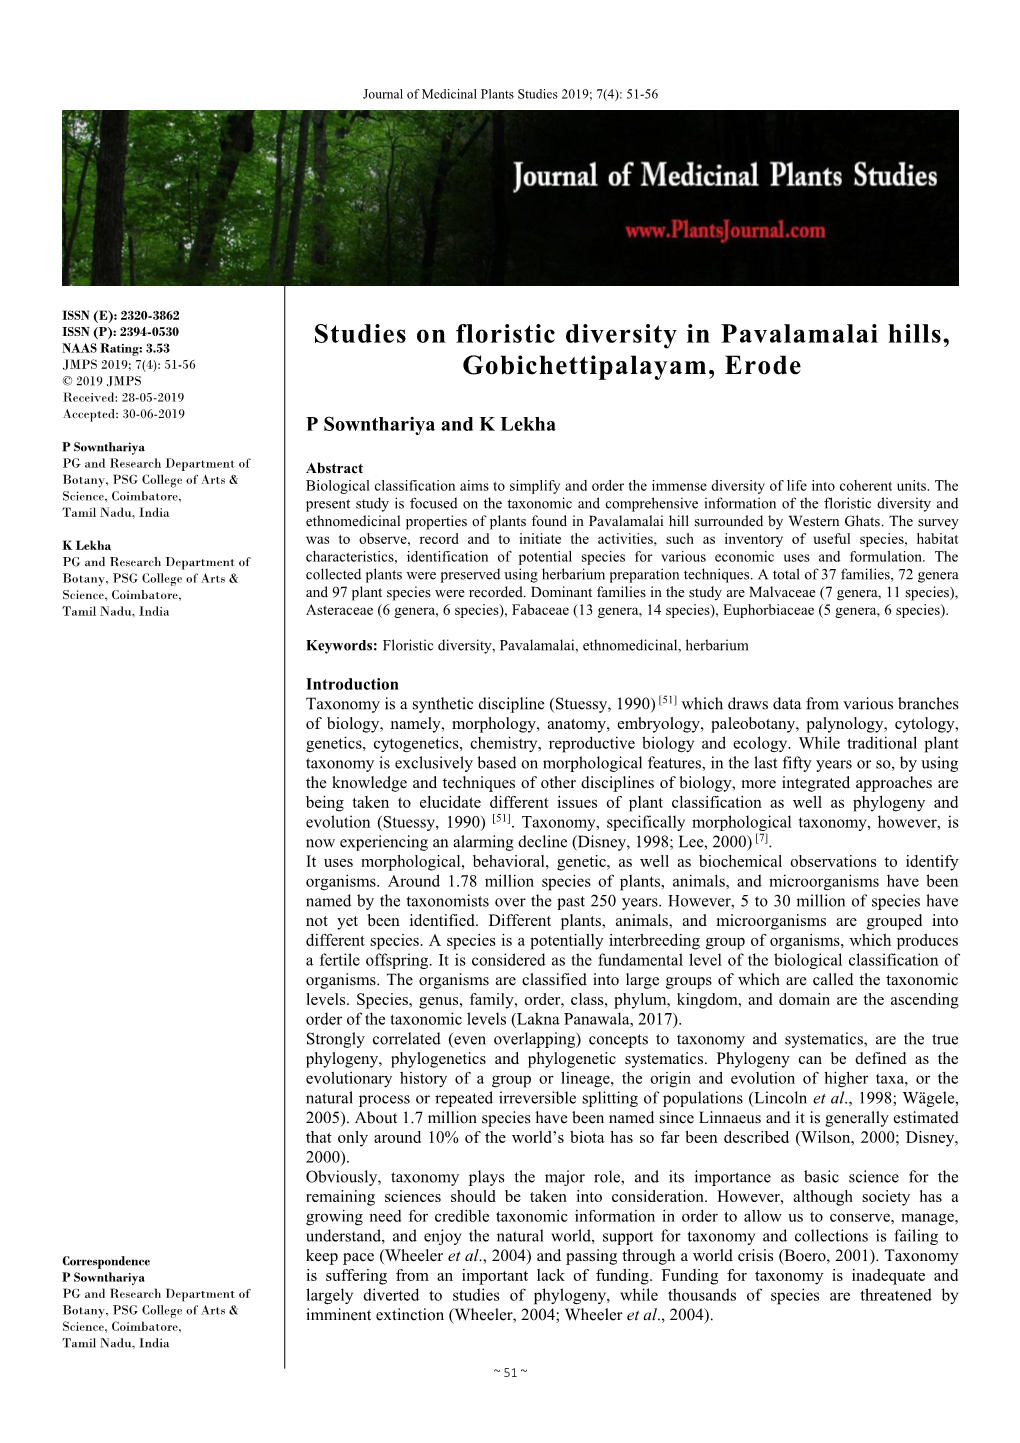 Studies on Floristic Diversity in Pavalamalai Hills